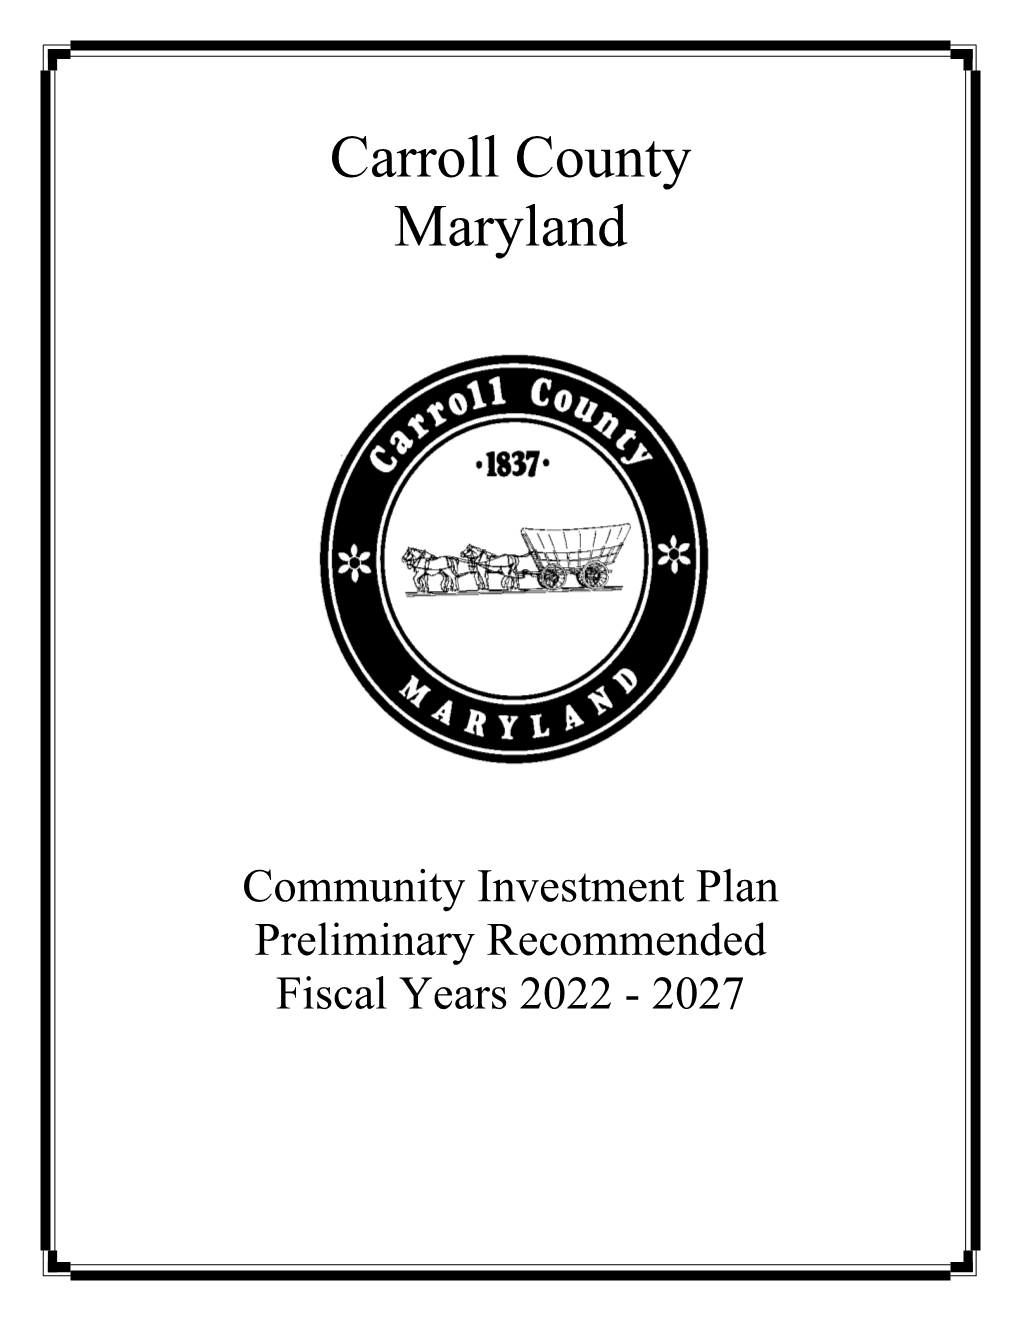 Carroll County Maryland